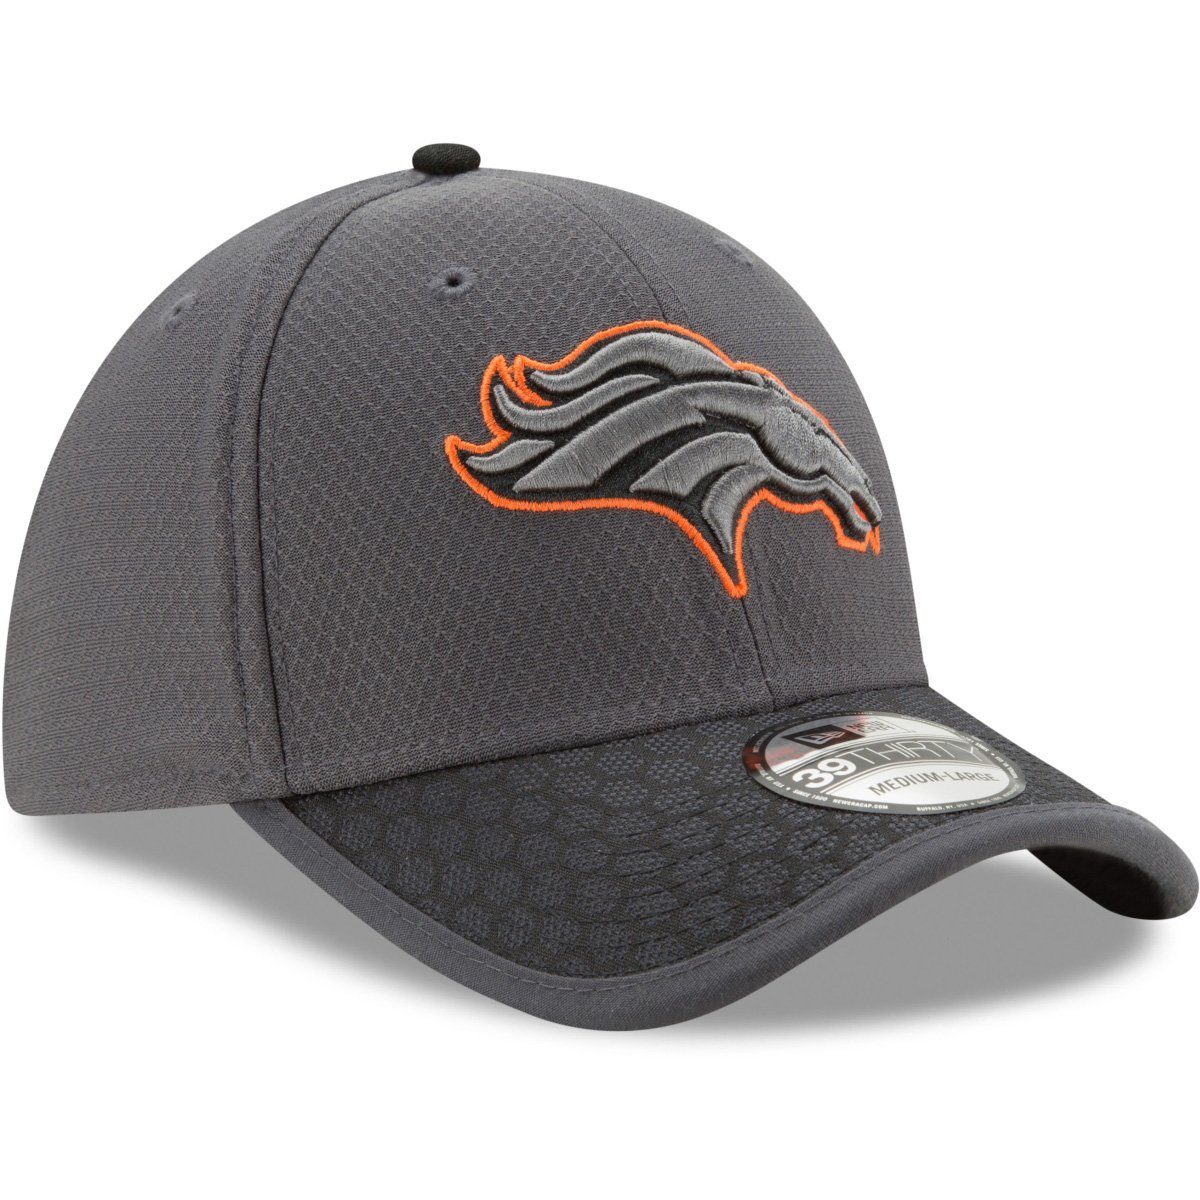 New Era 39Thirty Cap Denver NFL Broncos SIDELINE Flex